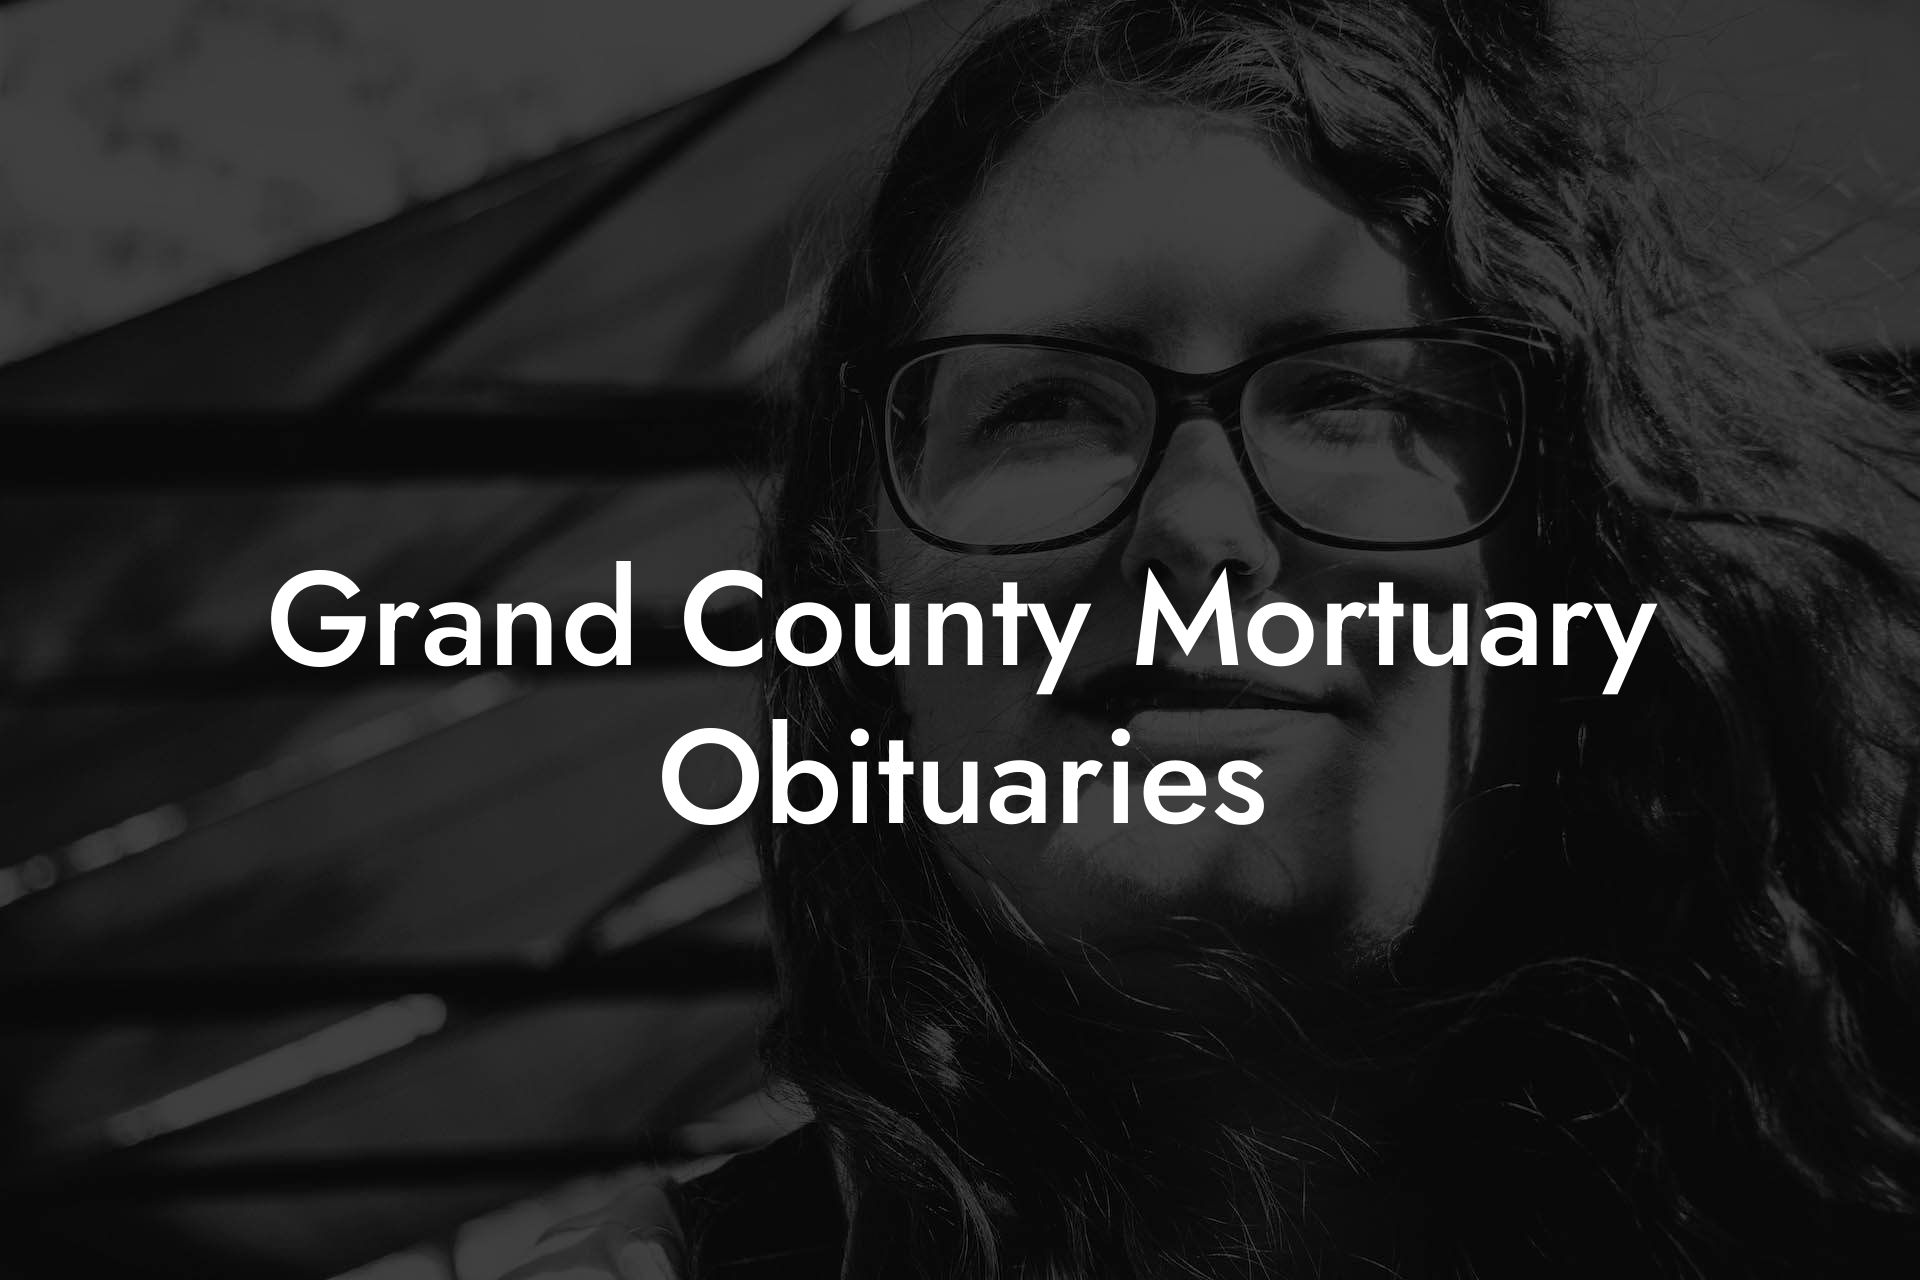 Grand County Mortuary Obituaries